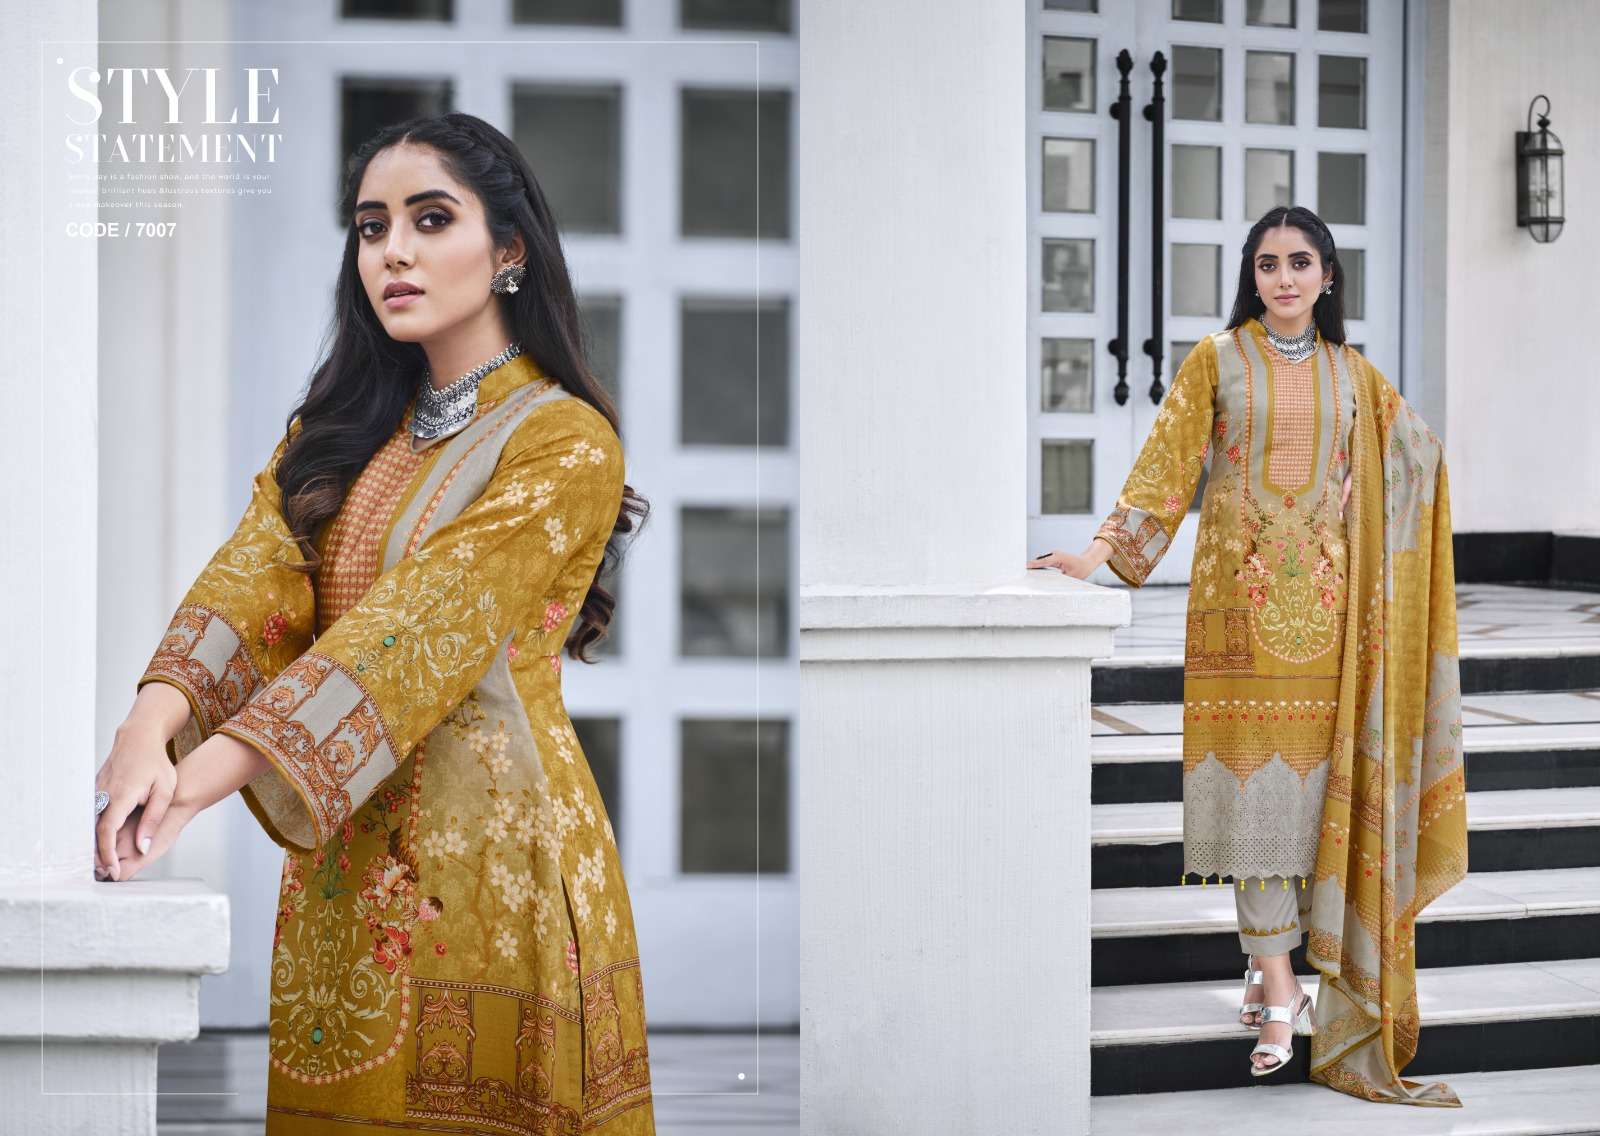 viona suits maisha 7001-7008 series trendy designer salwar suits design 2023 